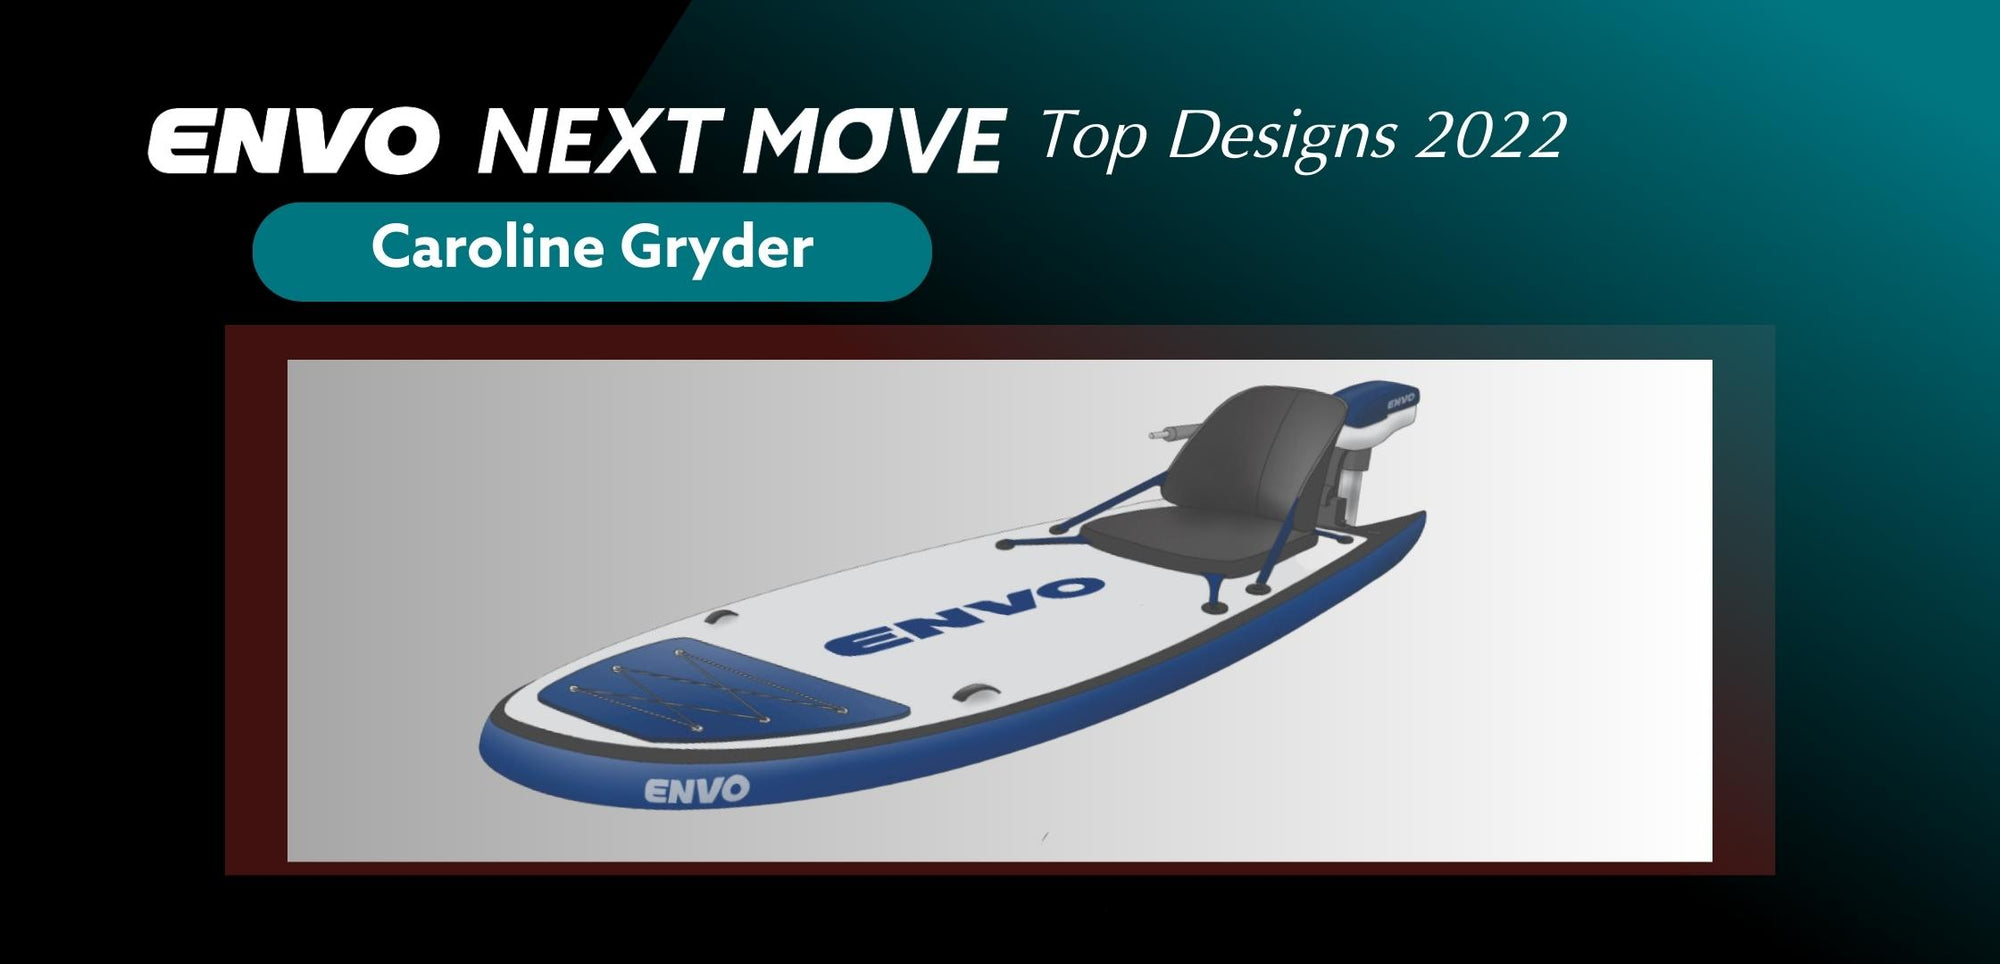 ENVO NEXT MOVE TOP DESIGNS 2022: Caroline Gryder - Electro Paddle